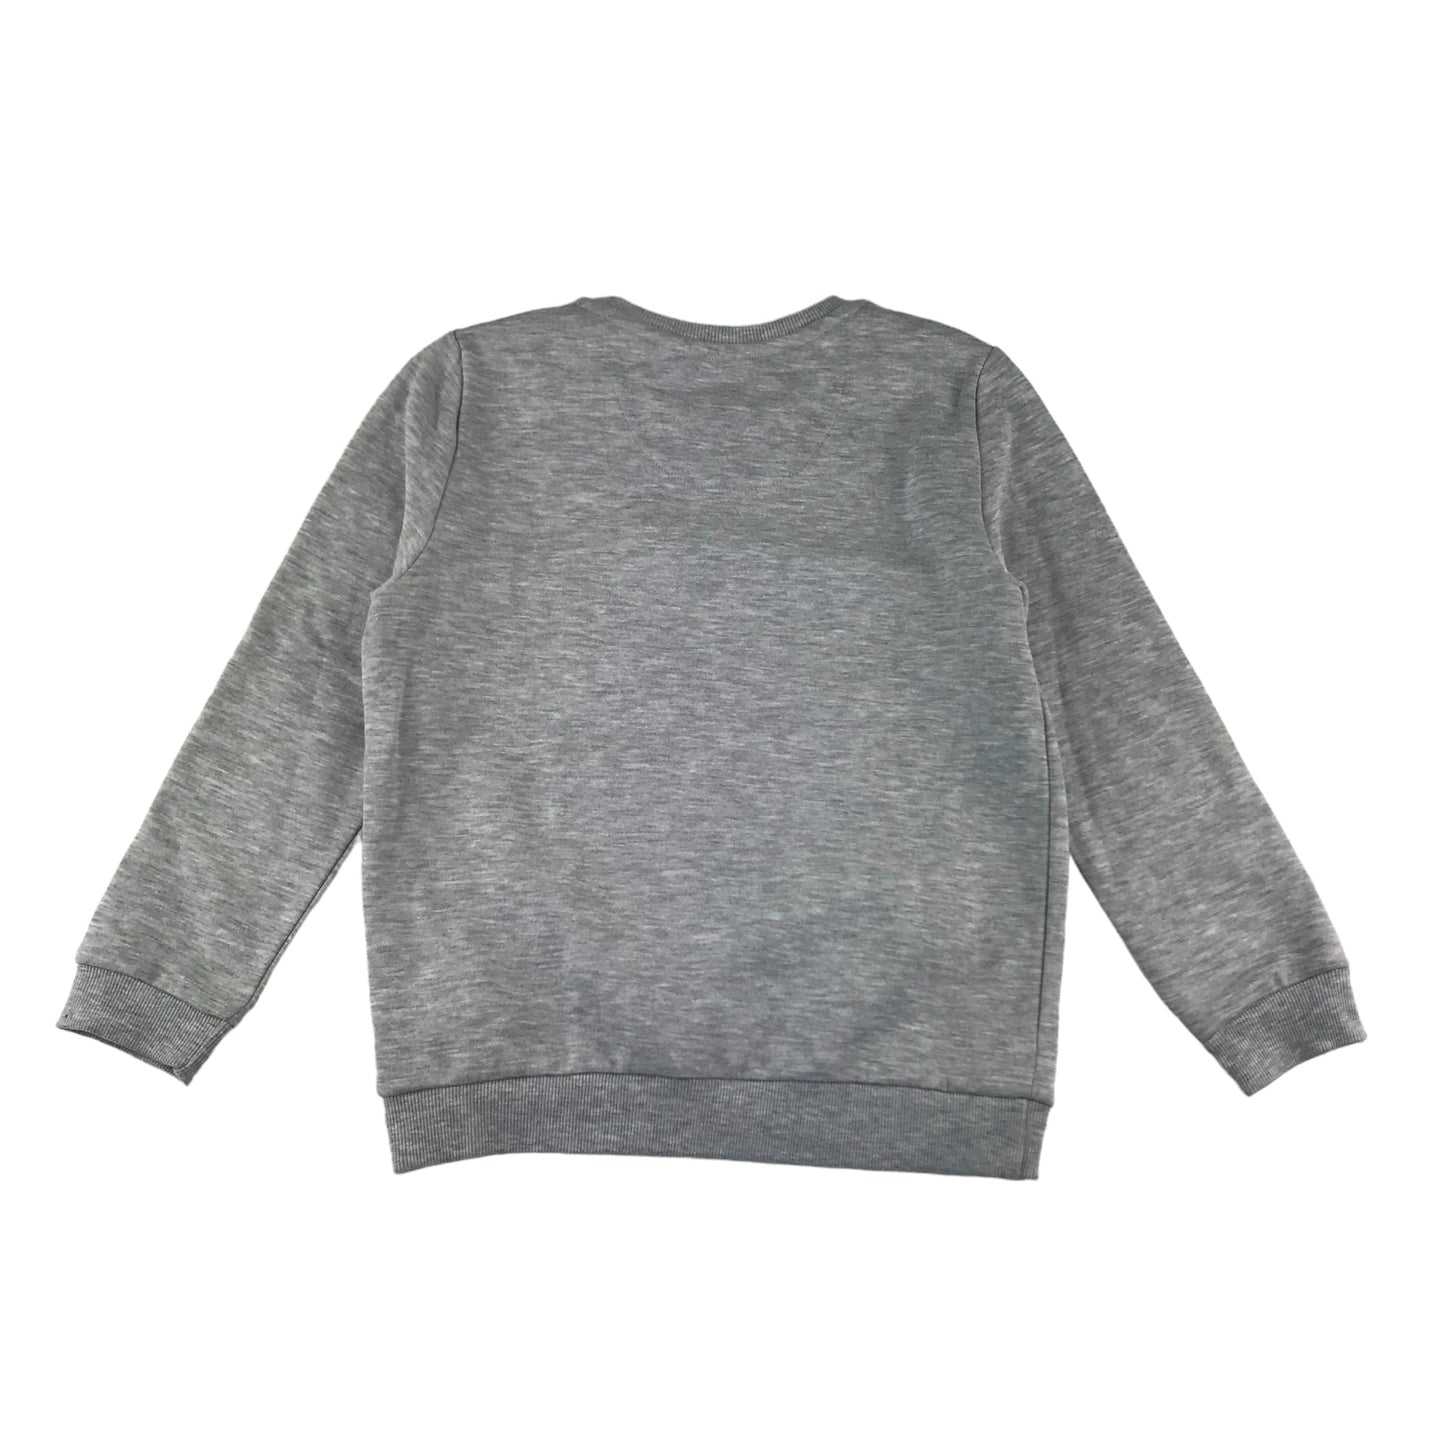 Primark Sweater Age 7 Light Grey Plain Long Sleeve